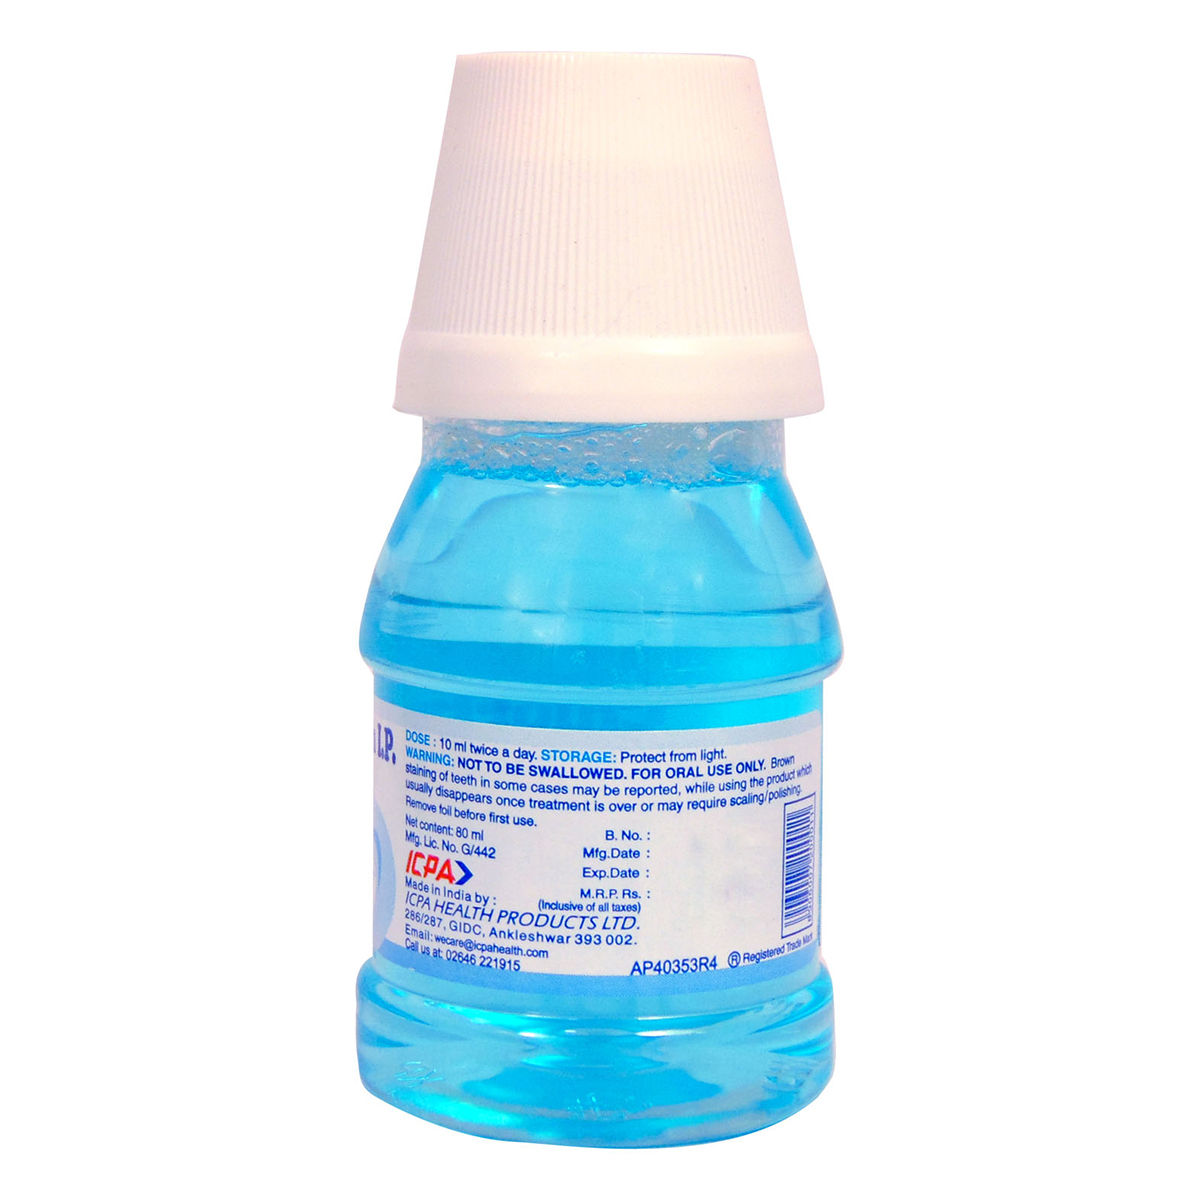 Hexidine Antiseptic-Antiplaque Mouthwash, 80 ml, Pack of 1 Mouth Wash